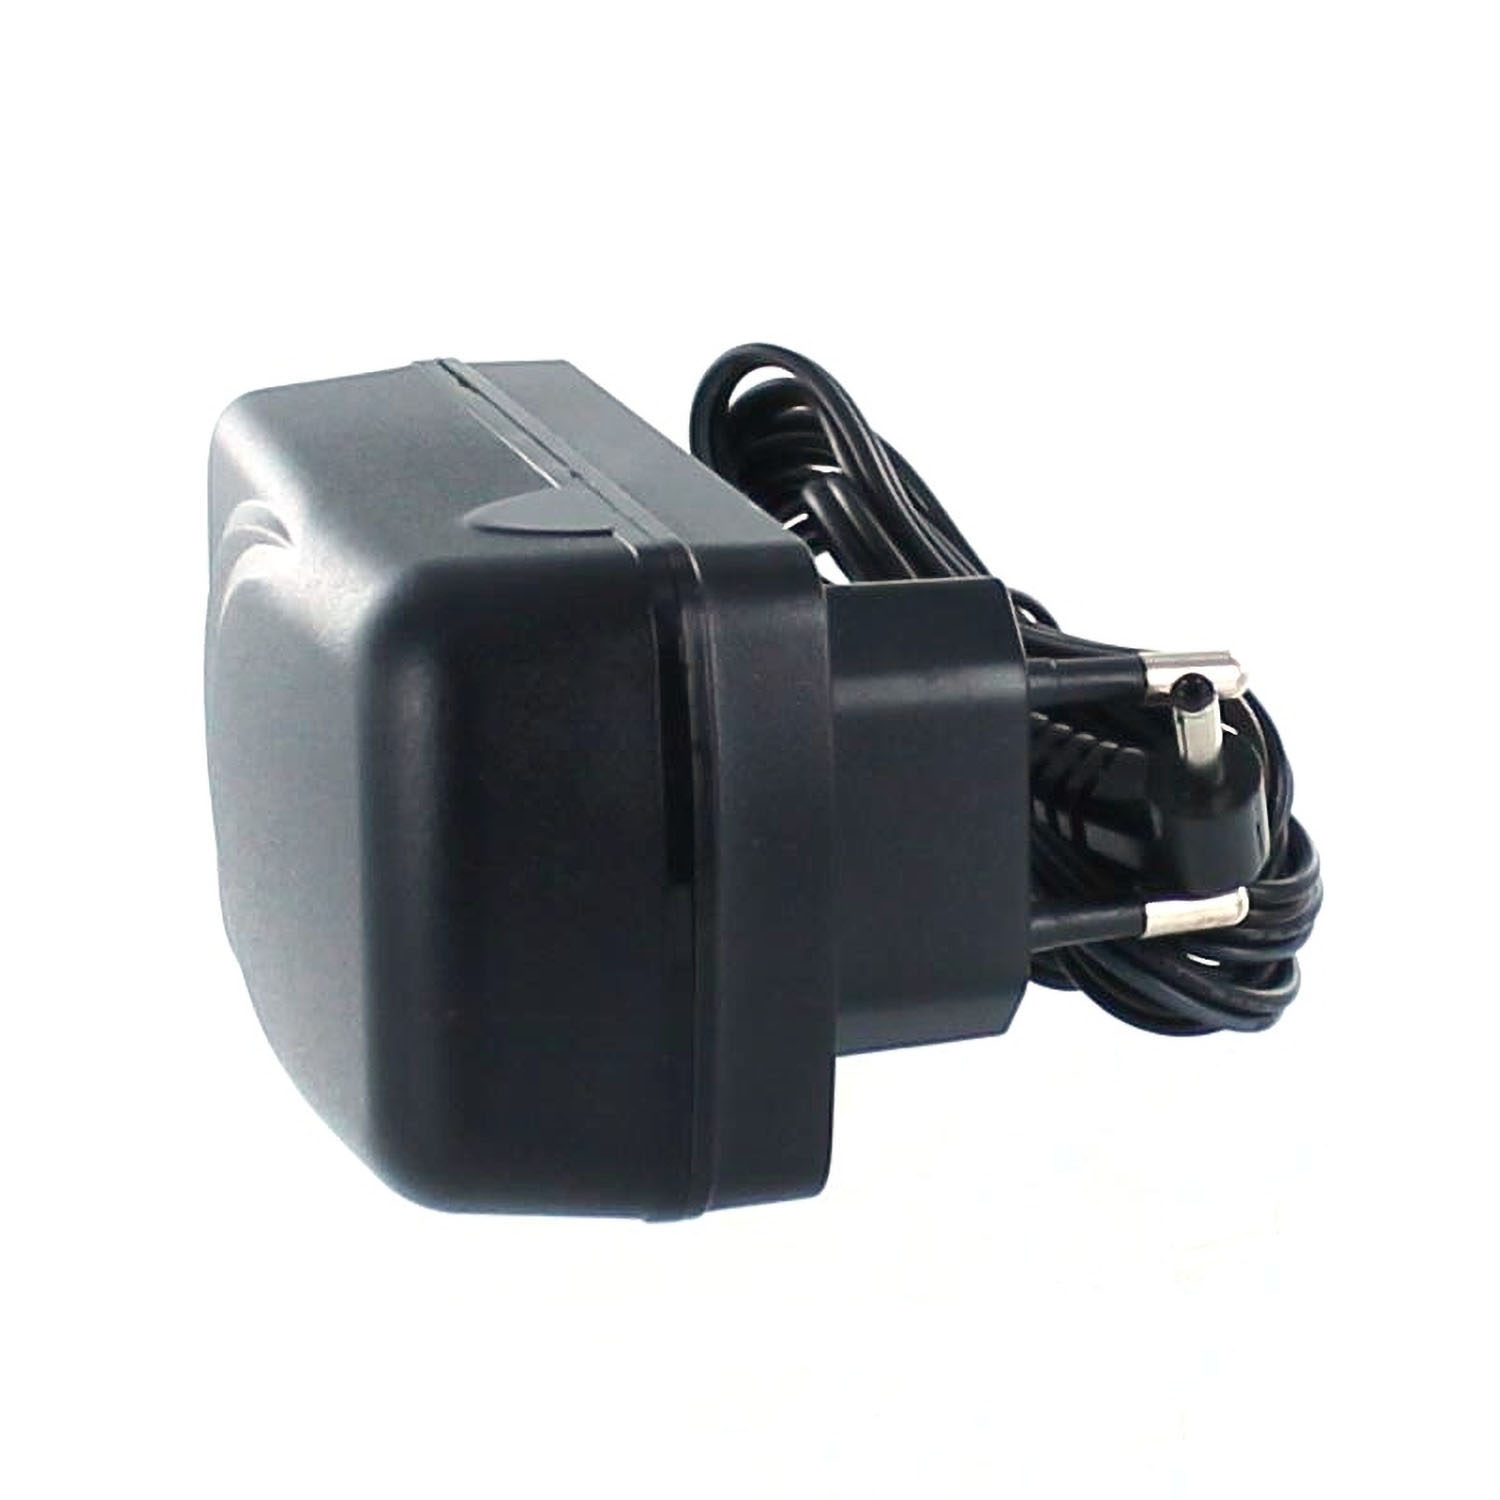 MOBILOTEC Netzteil Canon 8.4 Canon, mit MV700 Netzteil/Ladegerät schwarz Volt, kompatibel